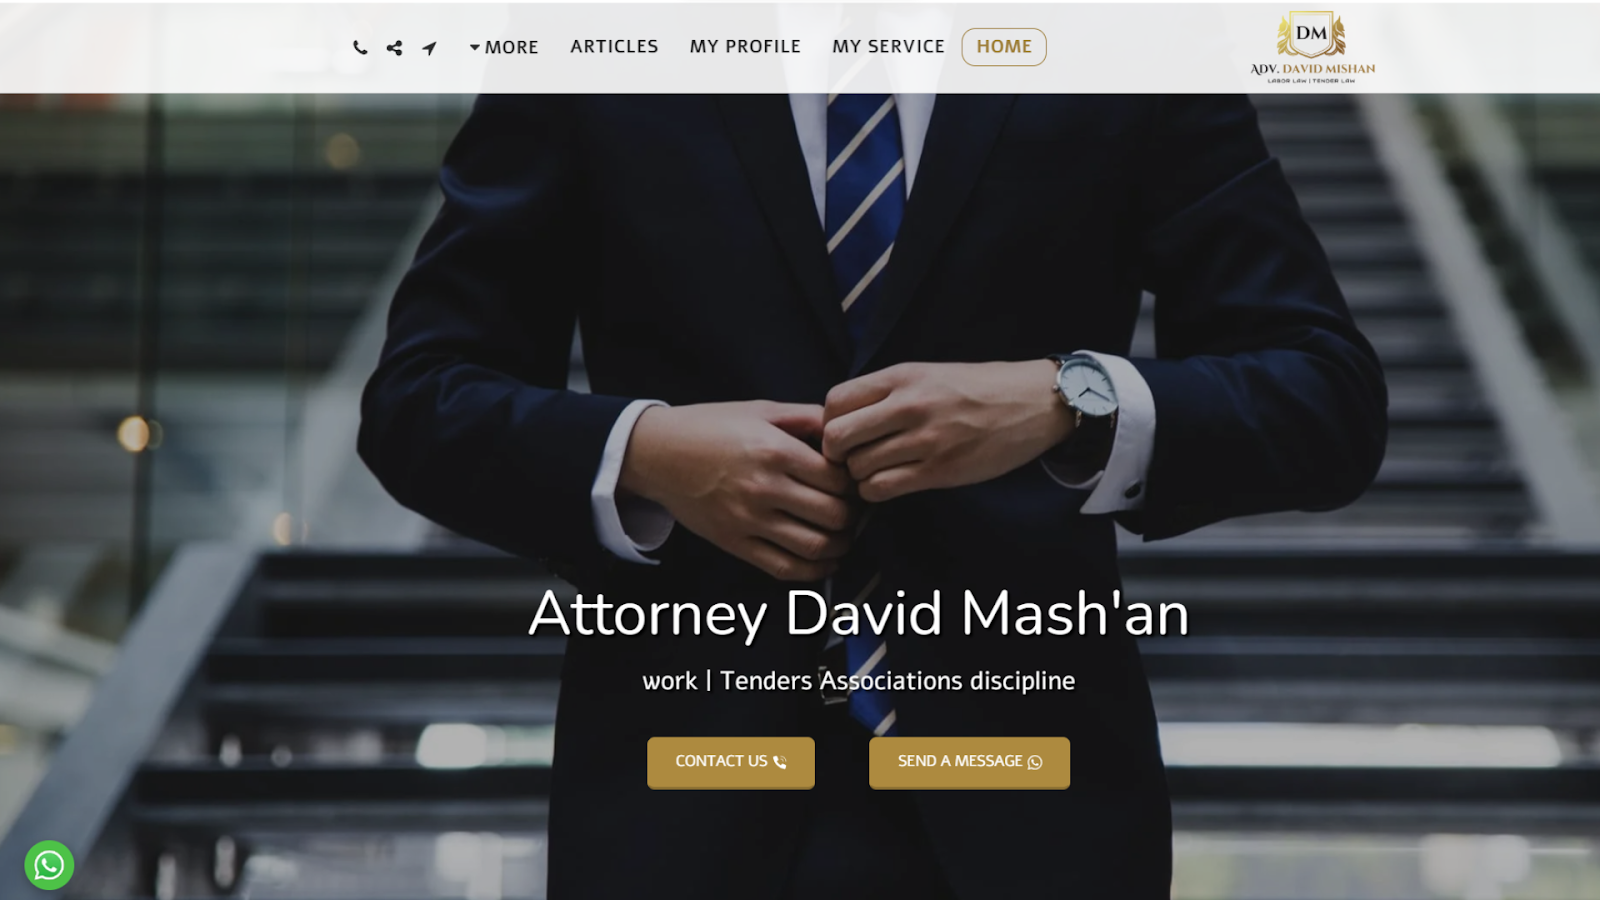 Screenshots from the Attorney David Mash’an website